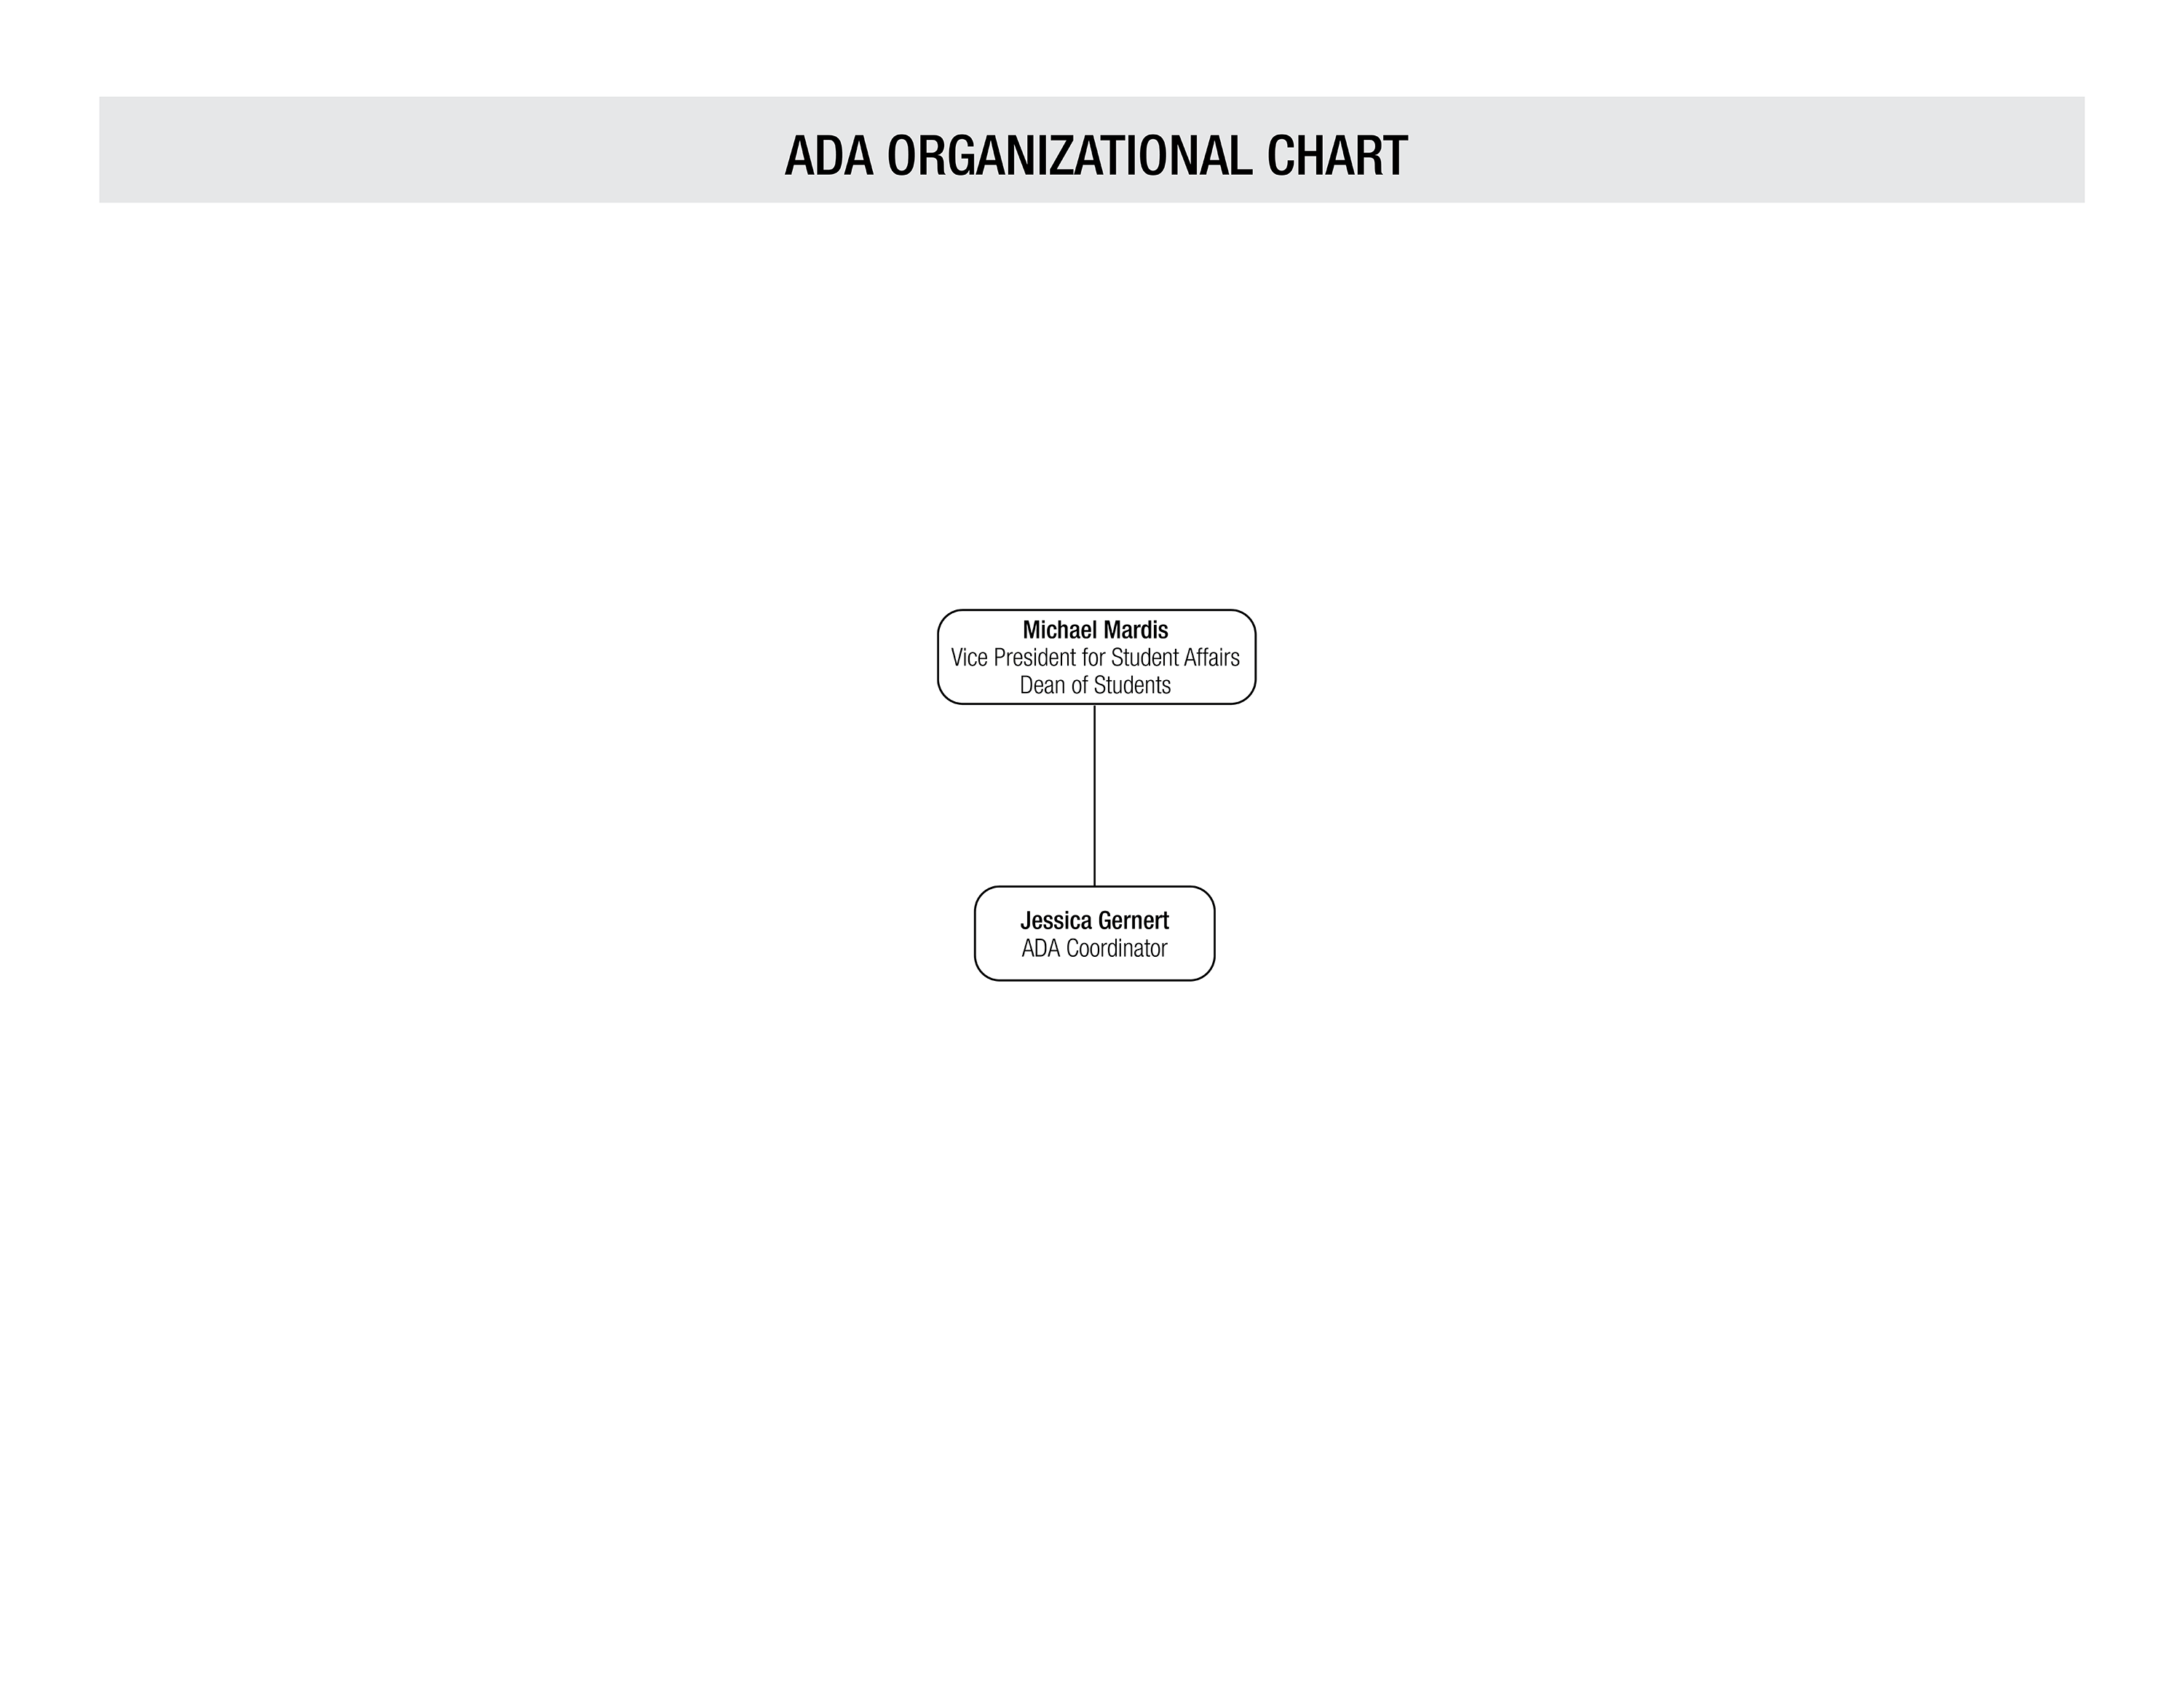 ADA Coordinator's Office Organizational Chart